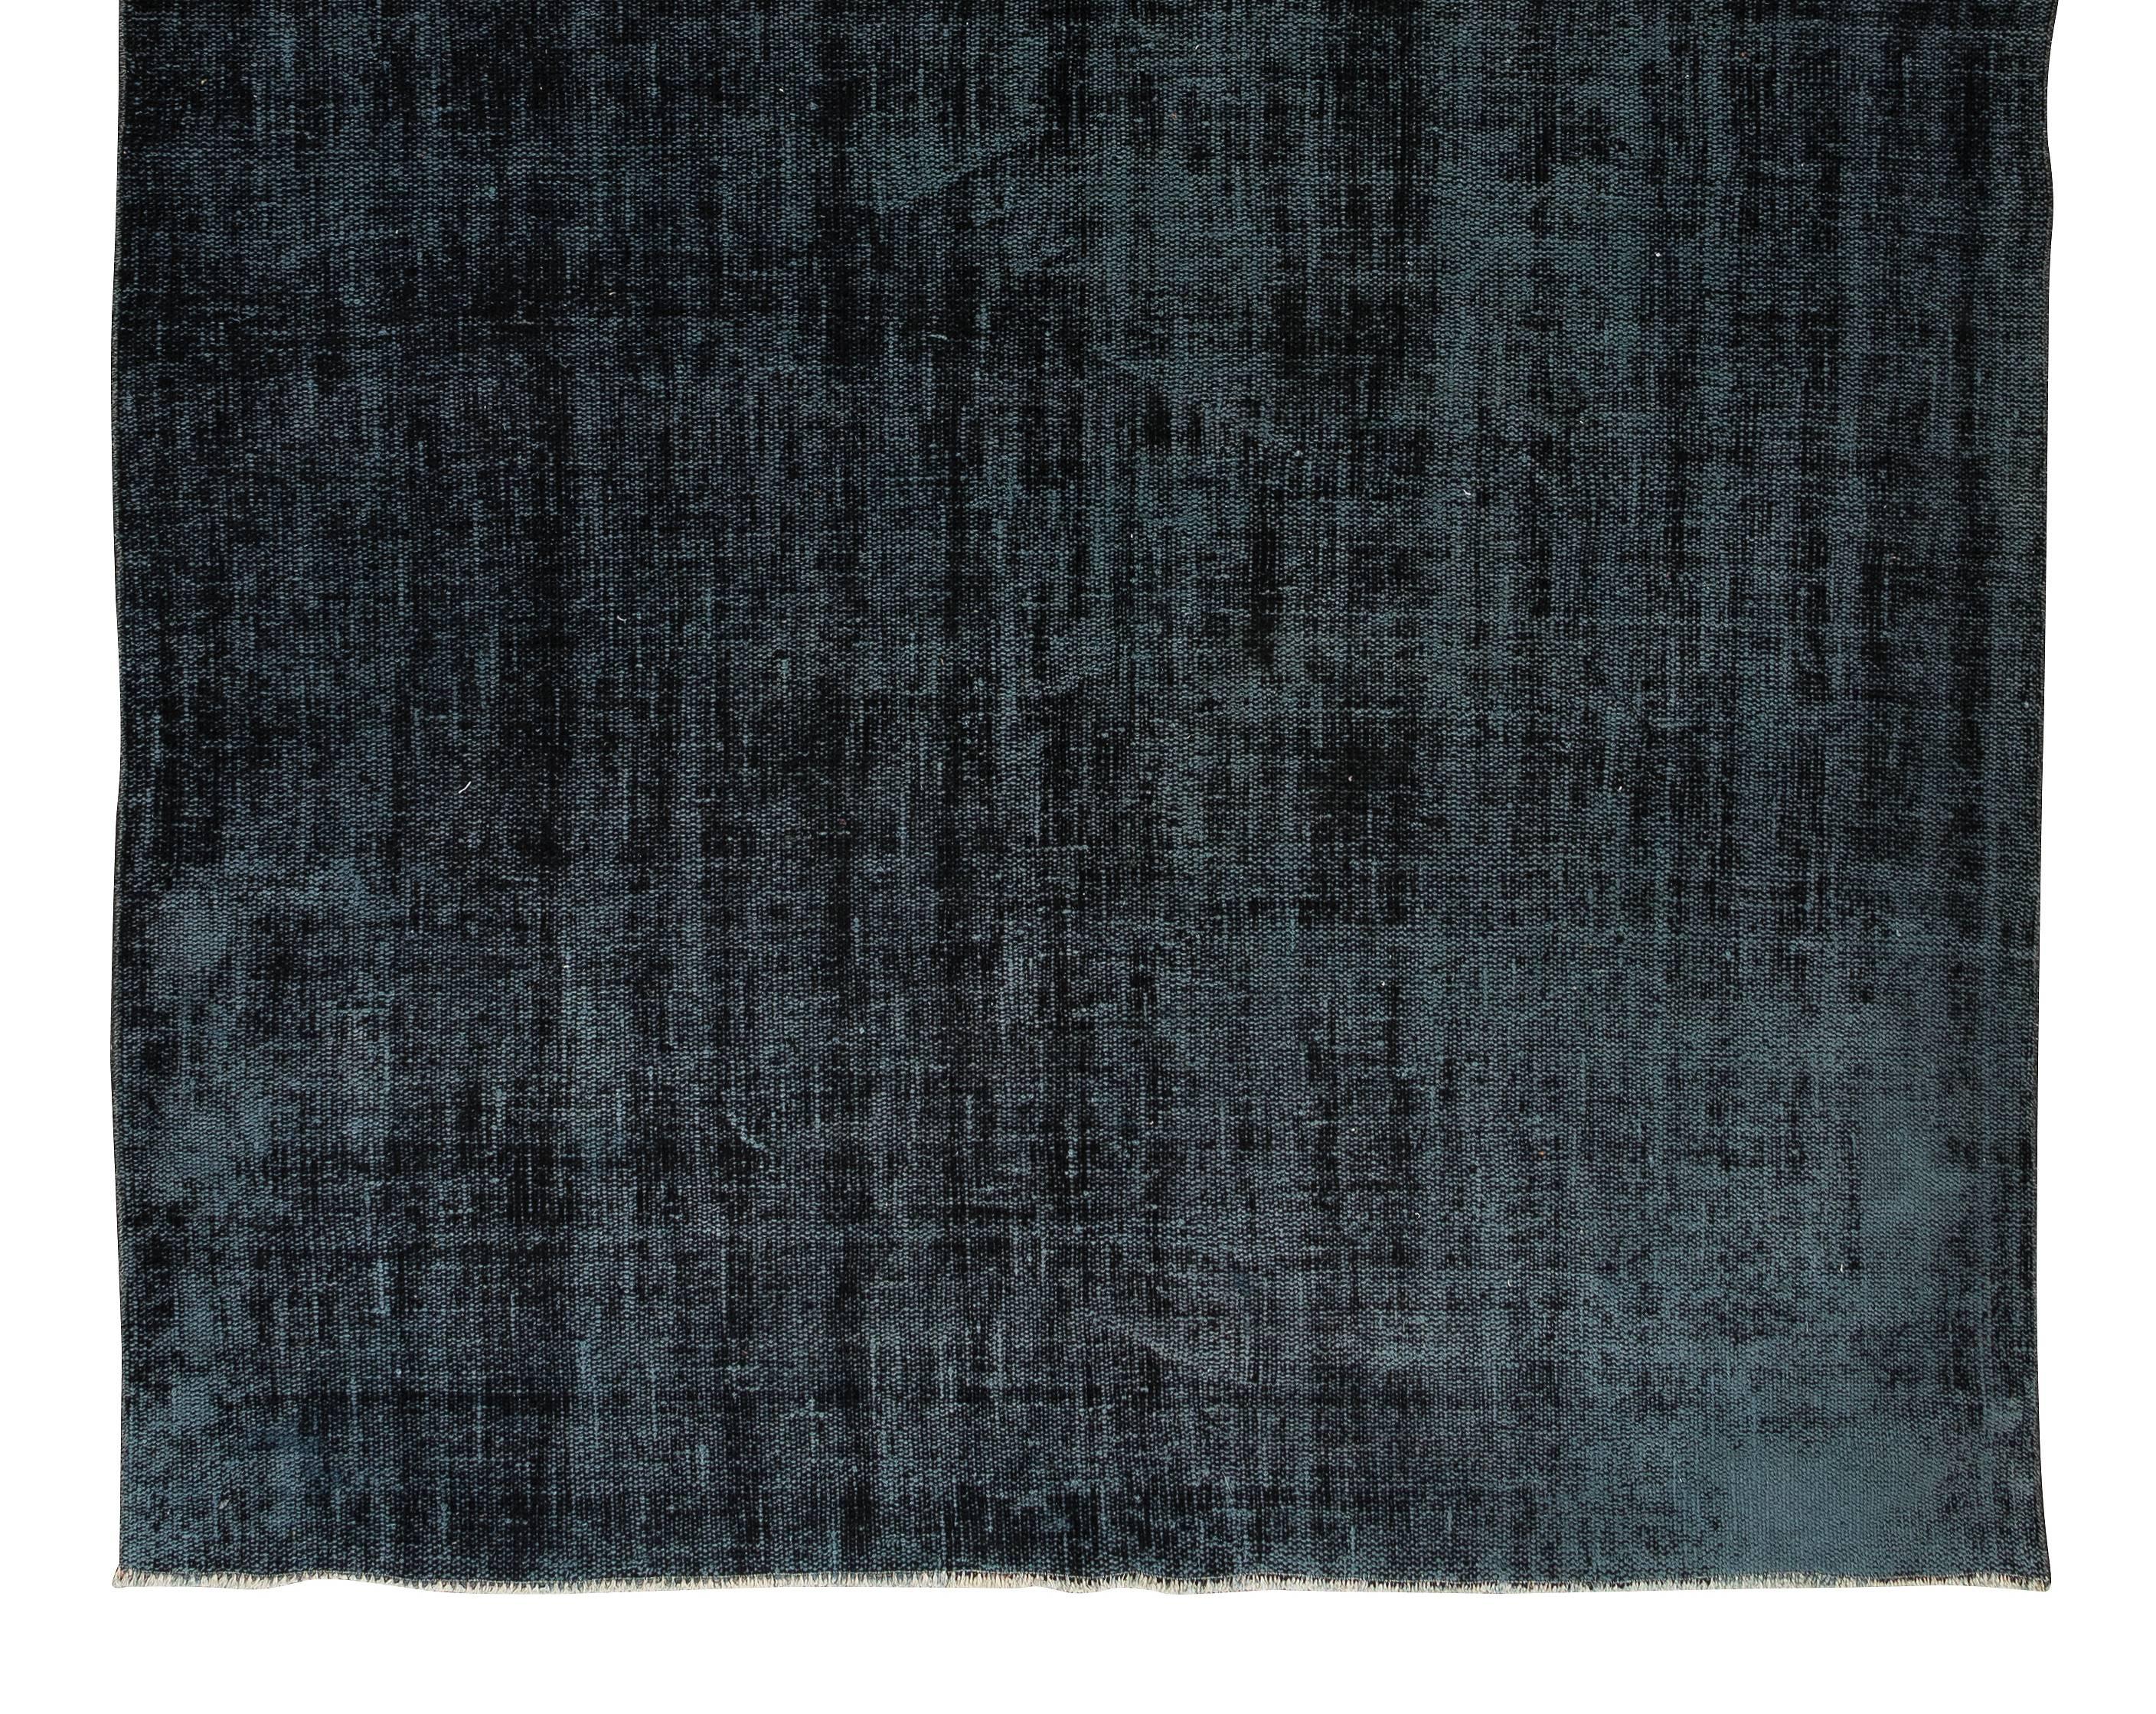 20th Century 6.6x10.6 Ft Black Re-Dyed Rug for Modern Interior, 1960s Handmade Turkish Carpet